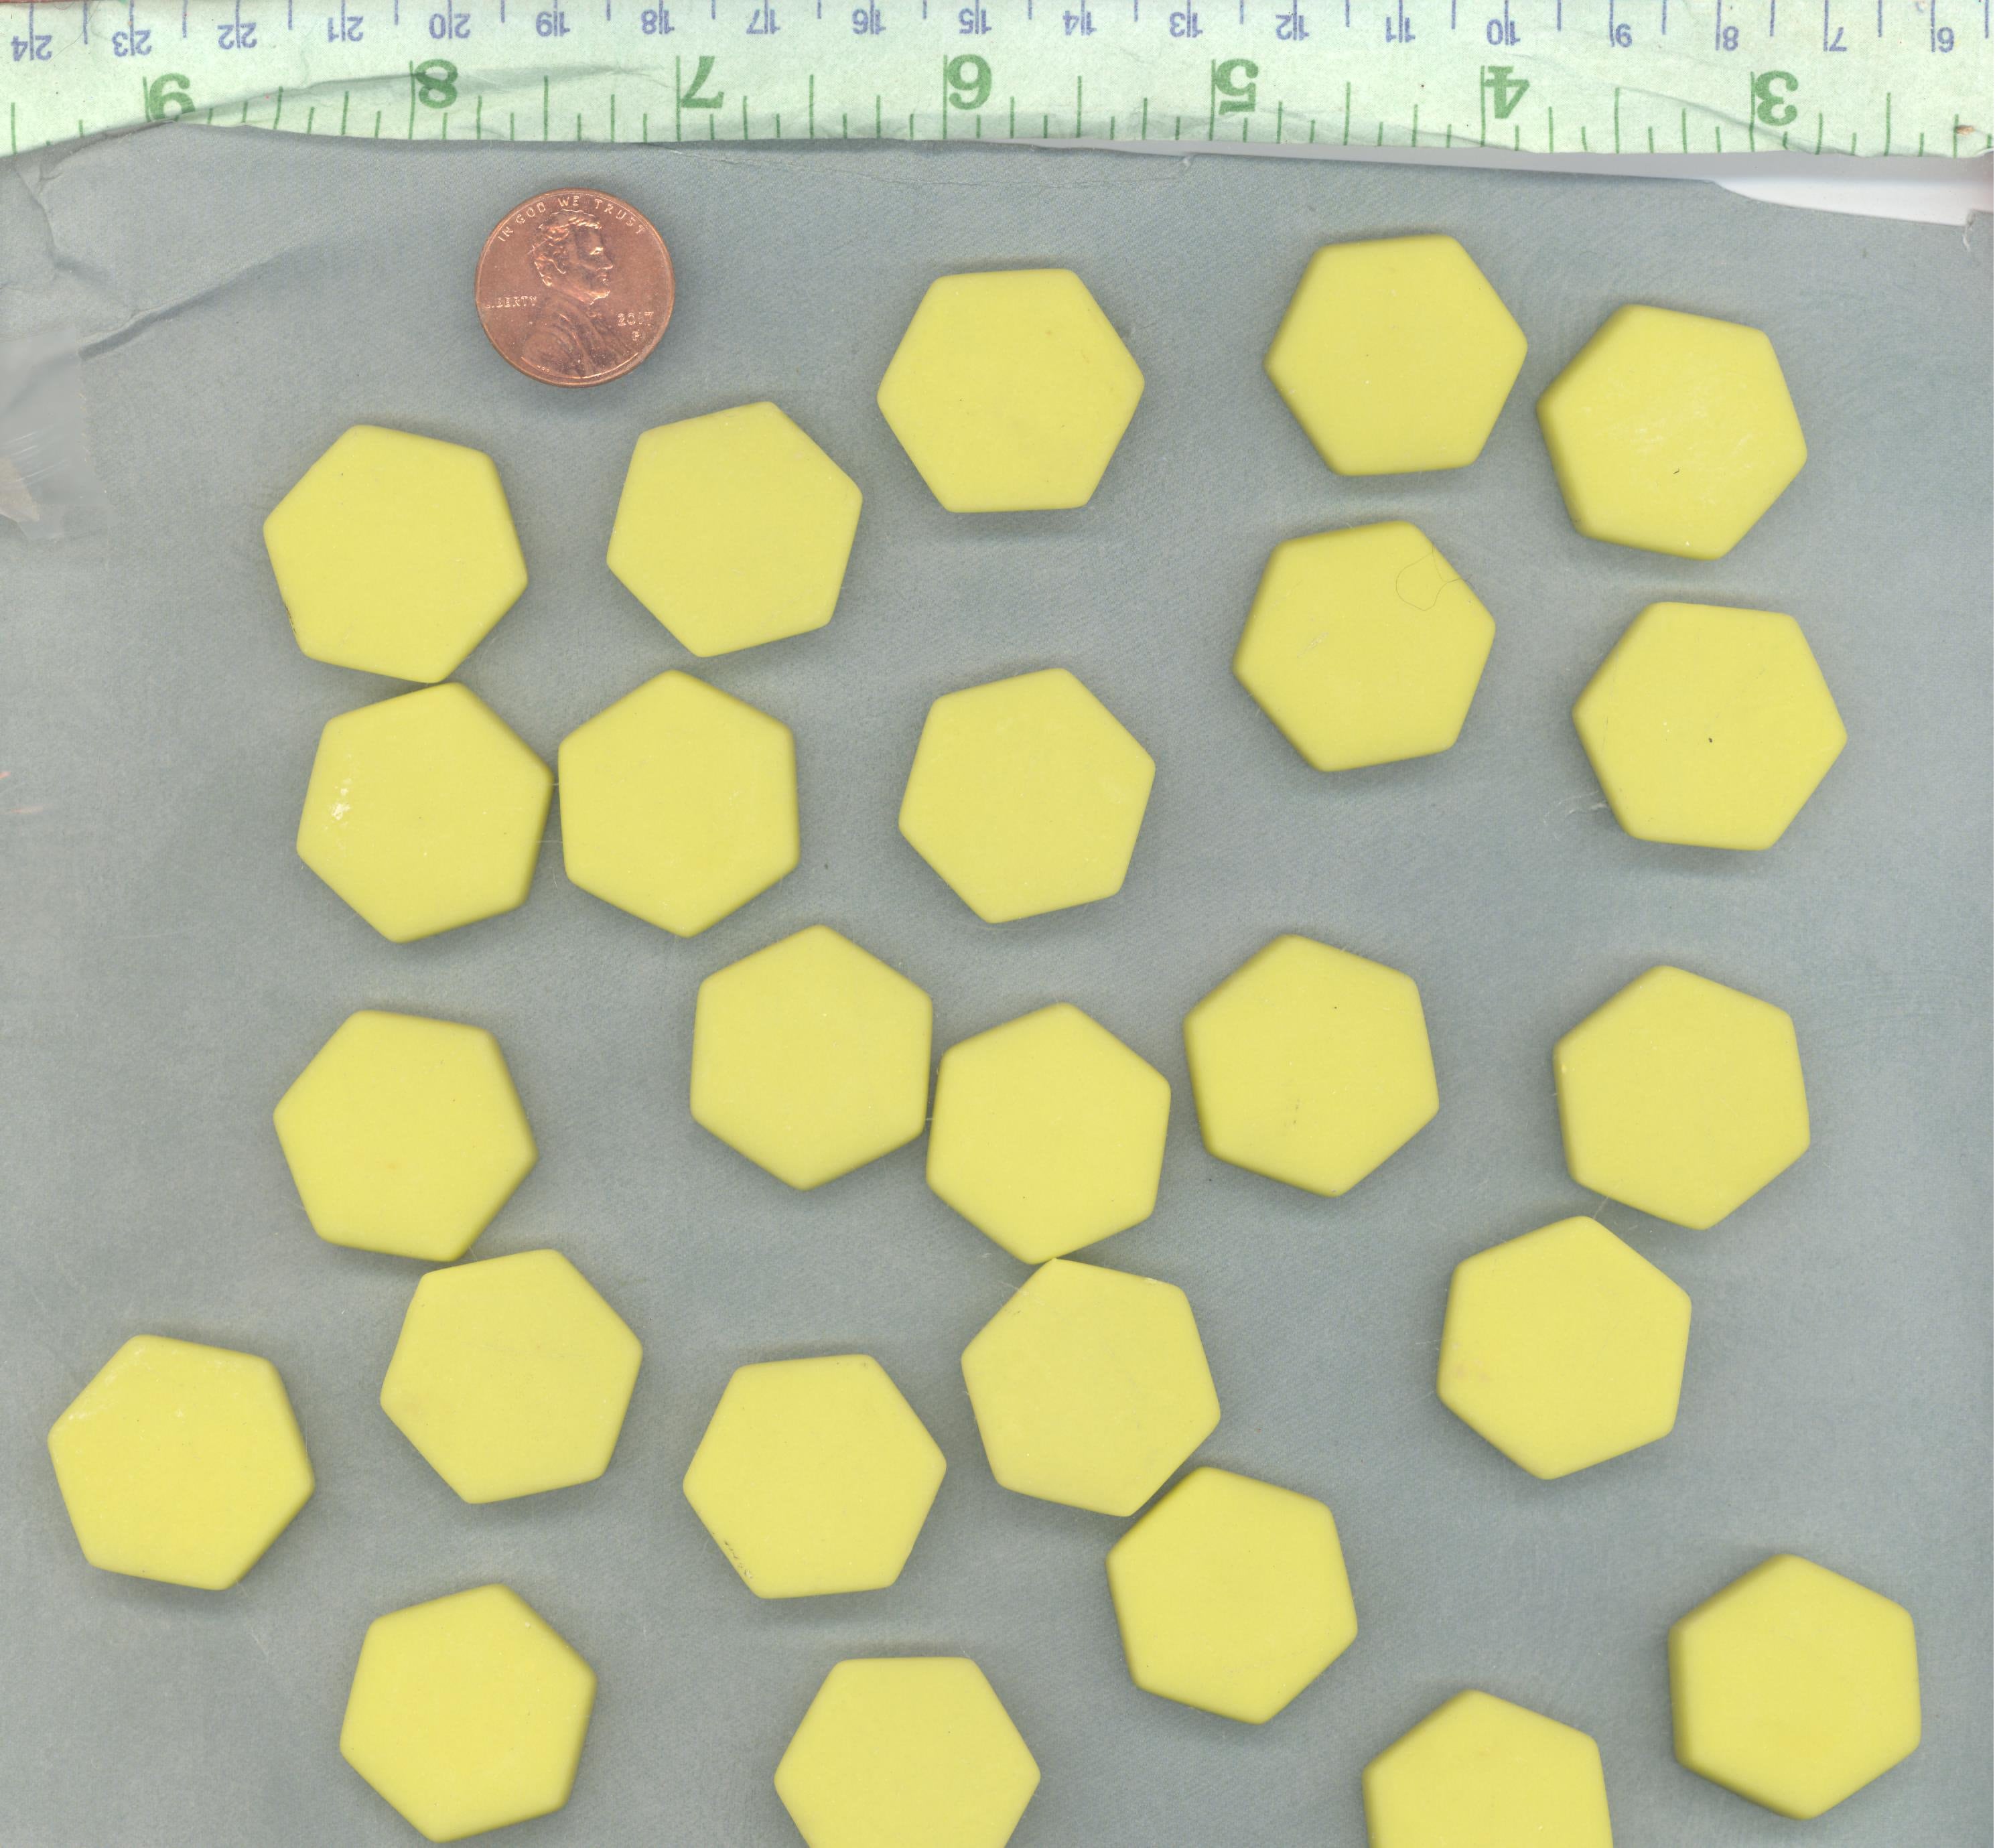 25 Glass 23mm MATTE Tiles in Mellow Yellow color Yellow Hexagon Mosaic Tiles